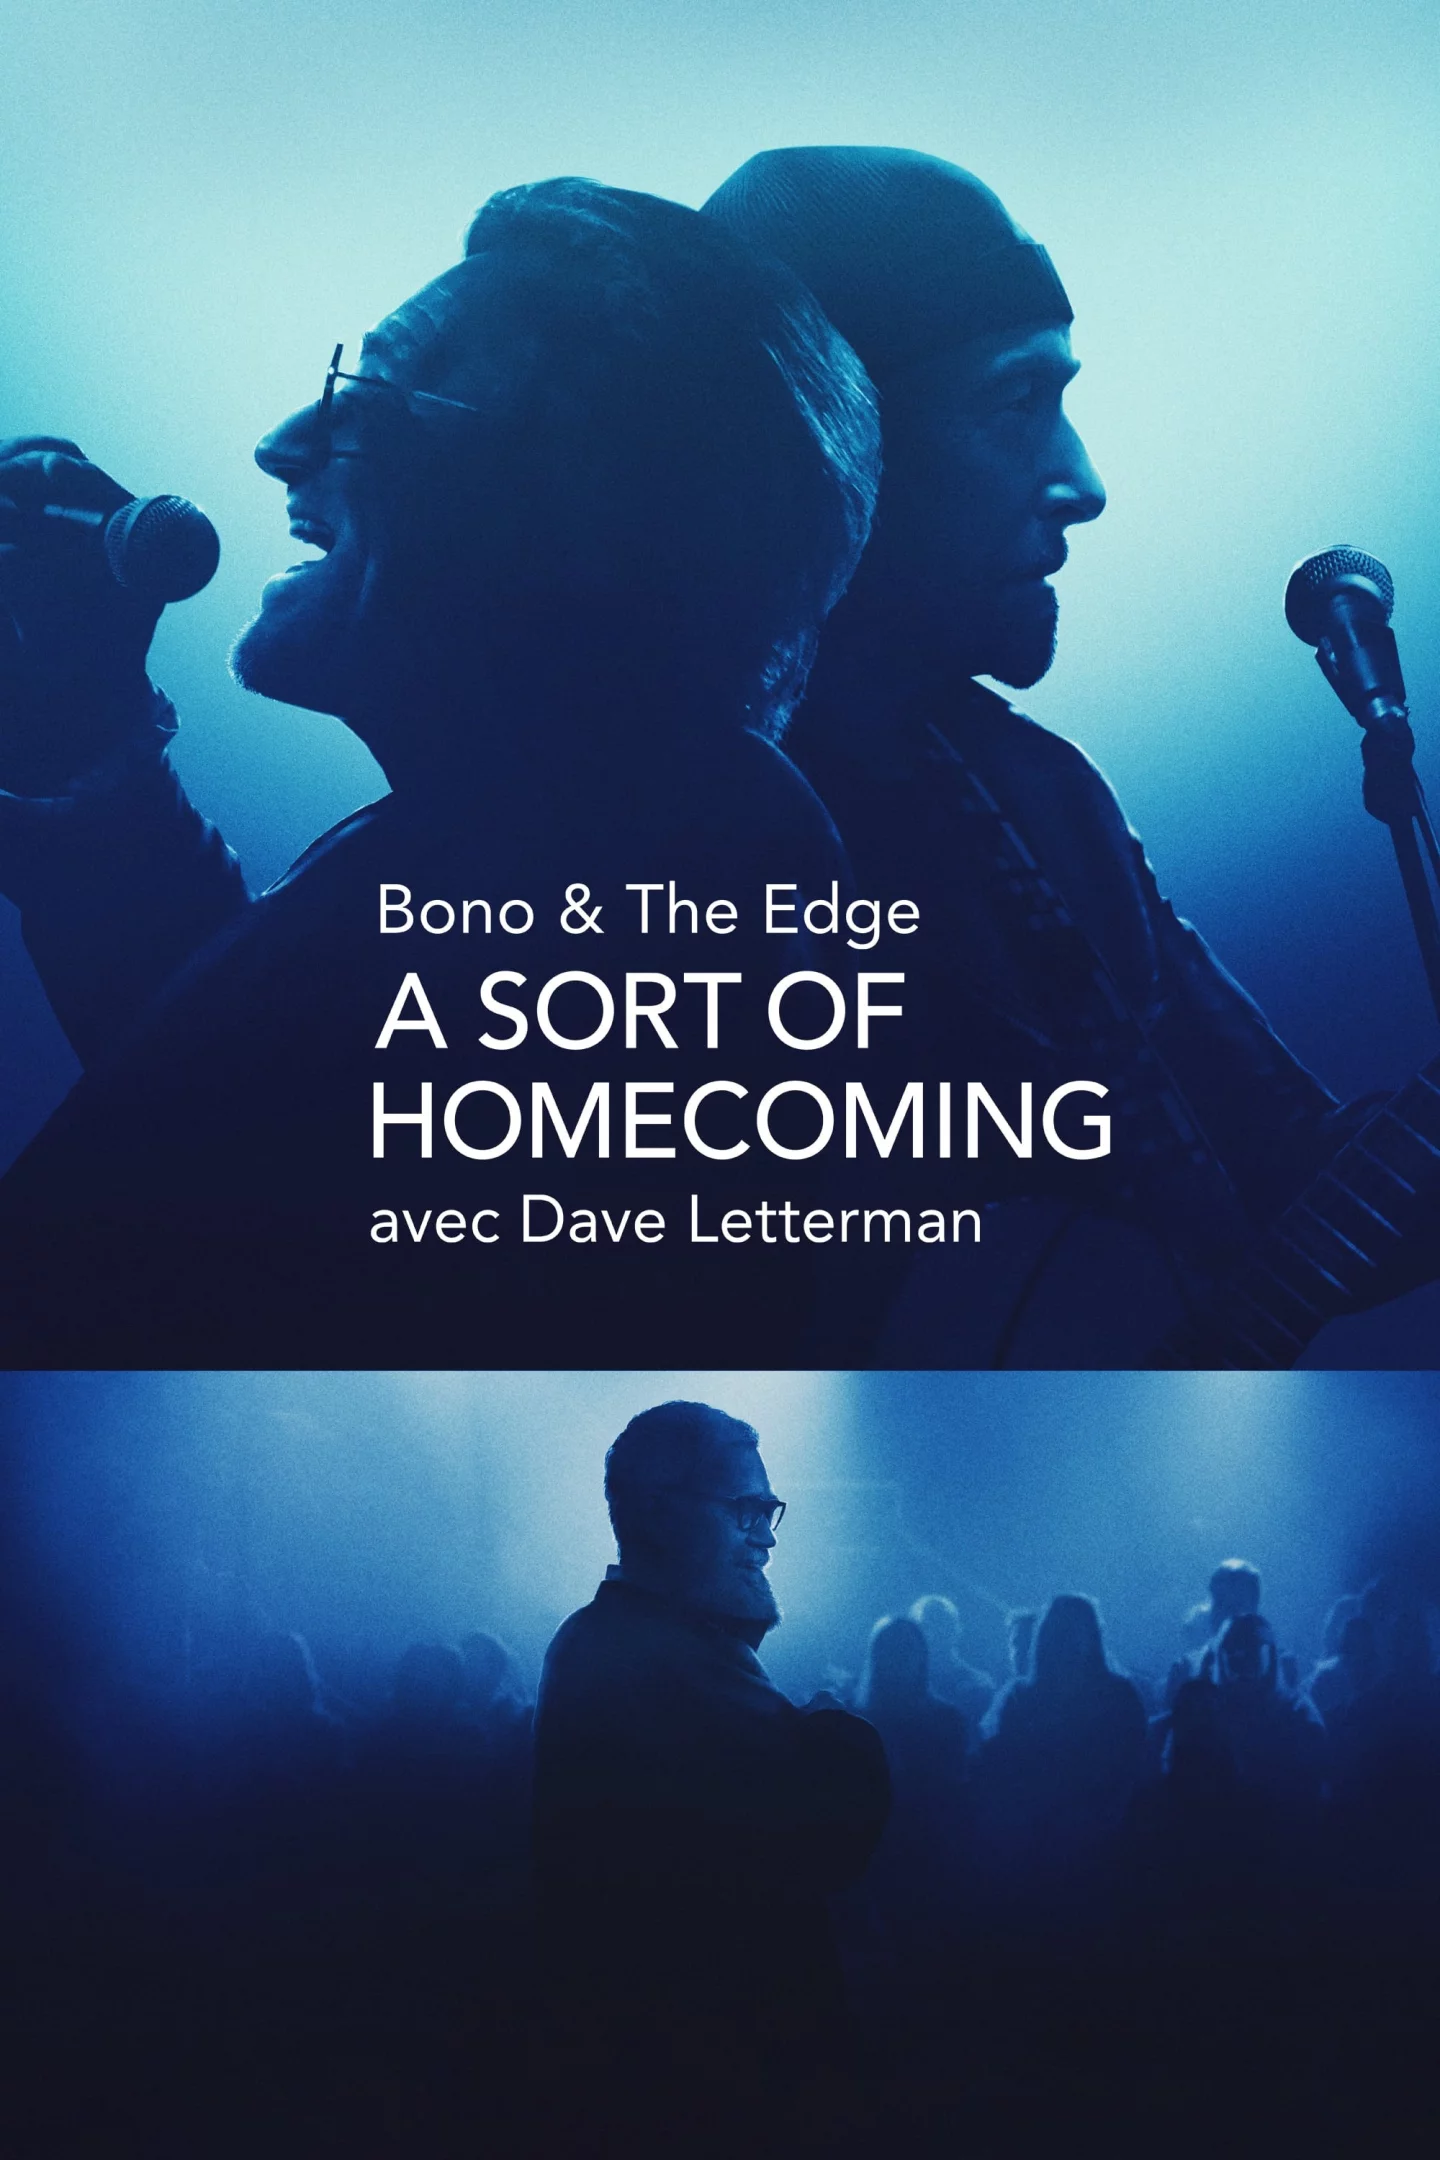 Photo 2 du film : Bono & The Edge : A Sort of Homecoming avec Dave Letterman